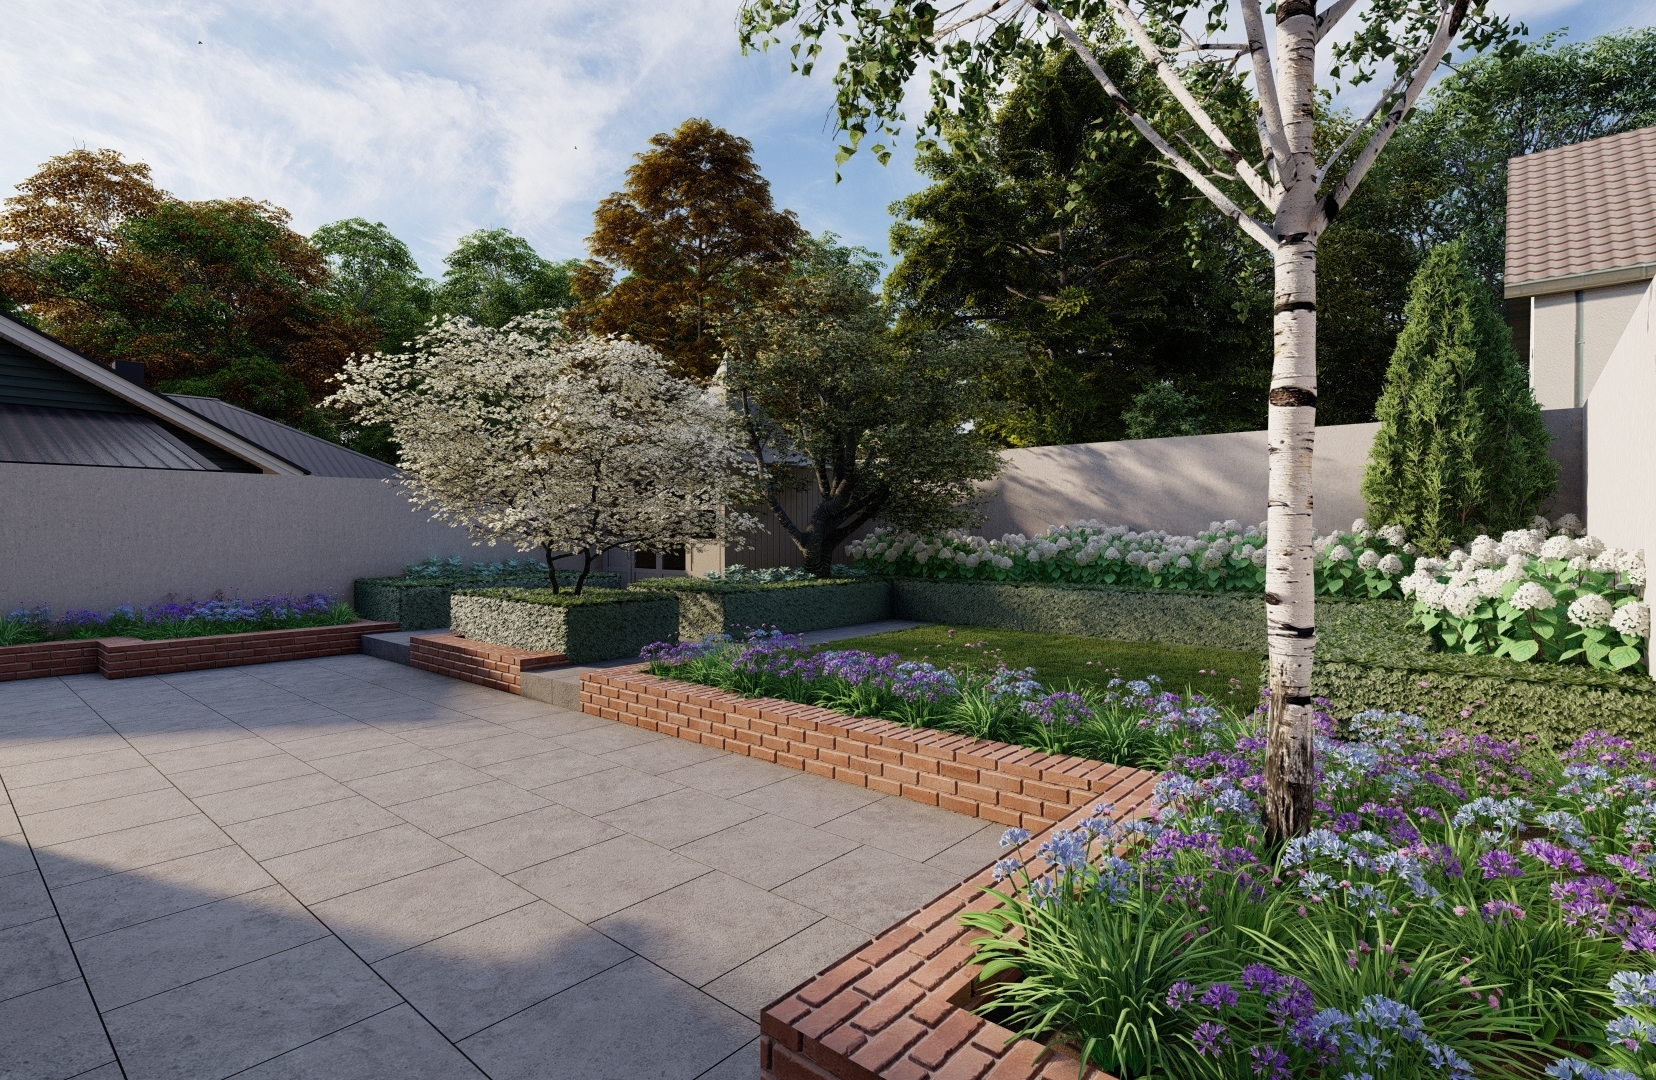 Family Garden Design Blackrock, Co Dublin featuring a formal layout on a split level | Owen Chubb Garden Design Services Dublin, Tel 087-2306 128